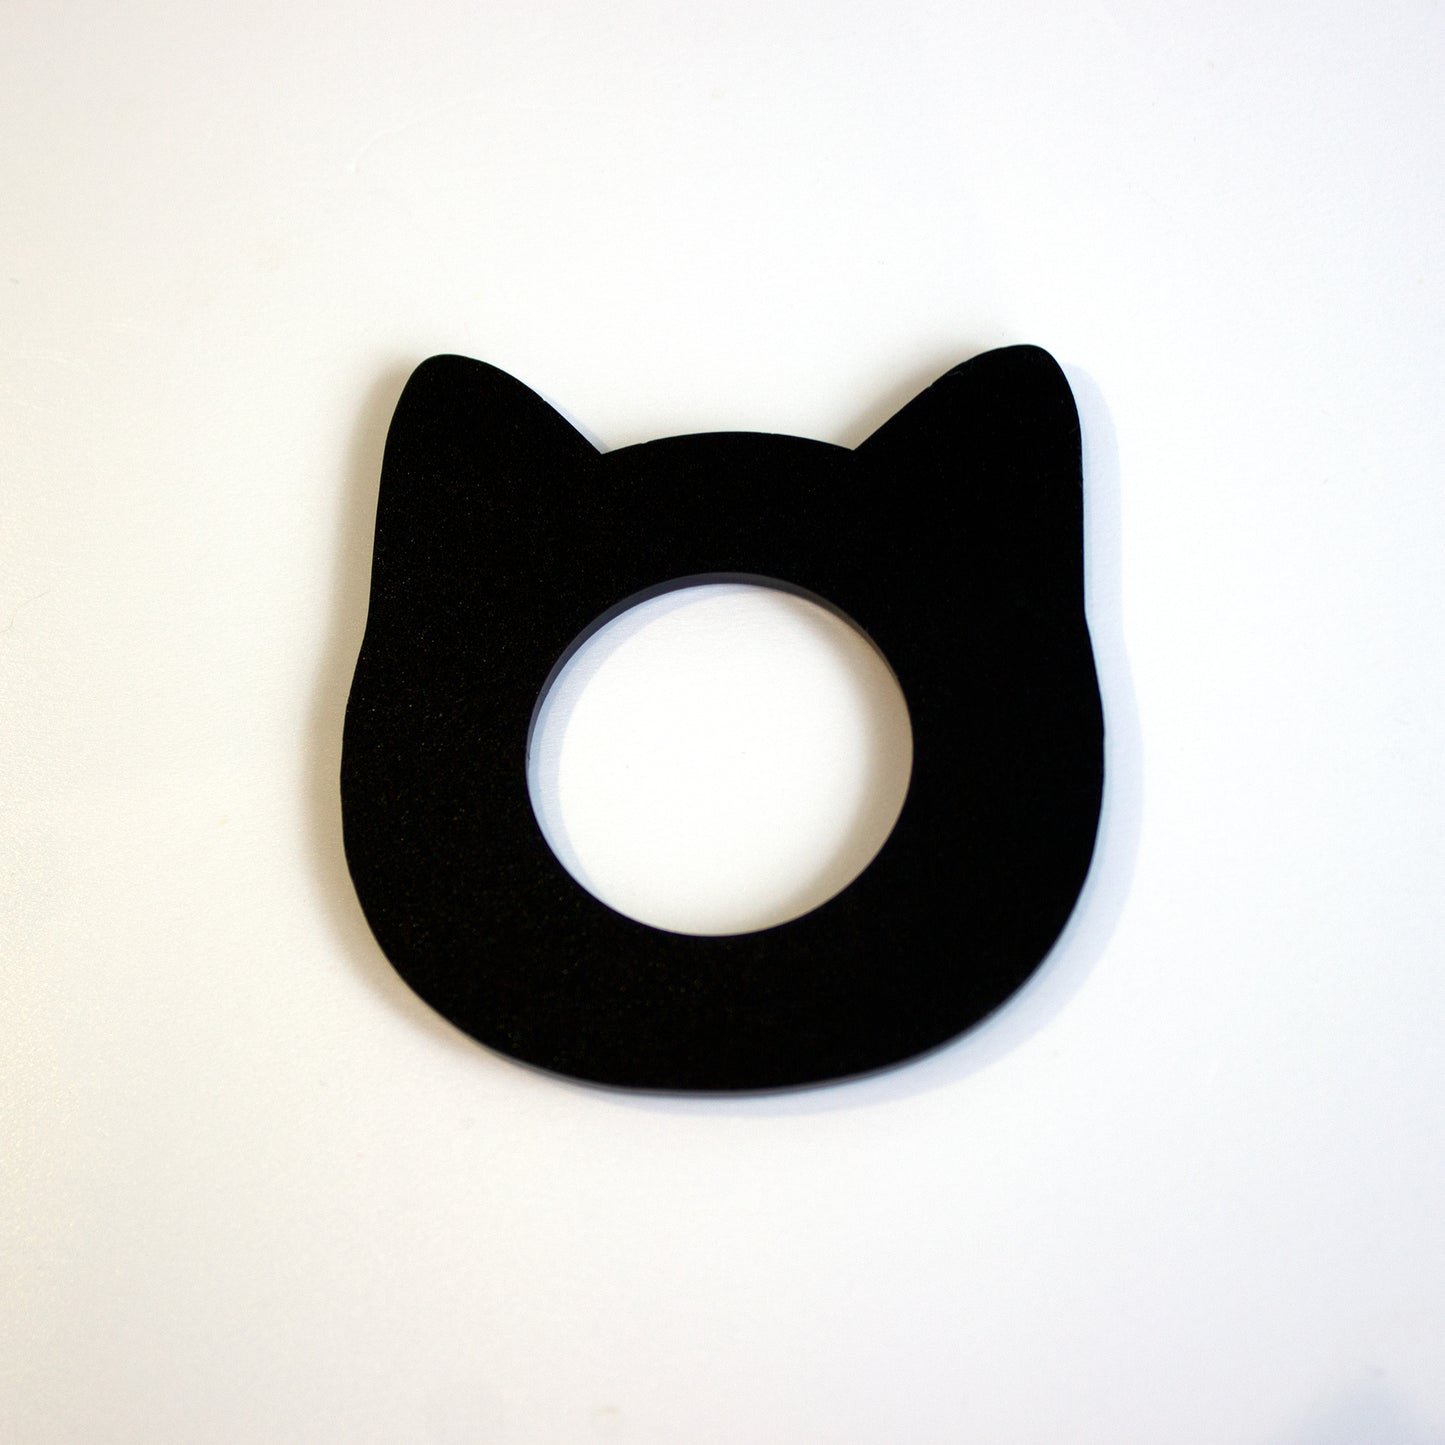 Cat Napkin Rings, Cat Ears Halloween Decorations, Spooky Table Decor